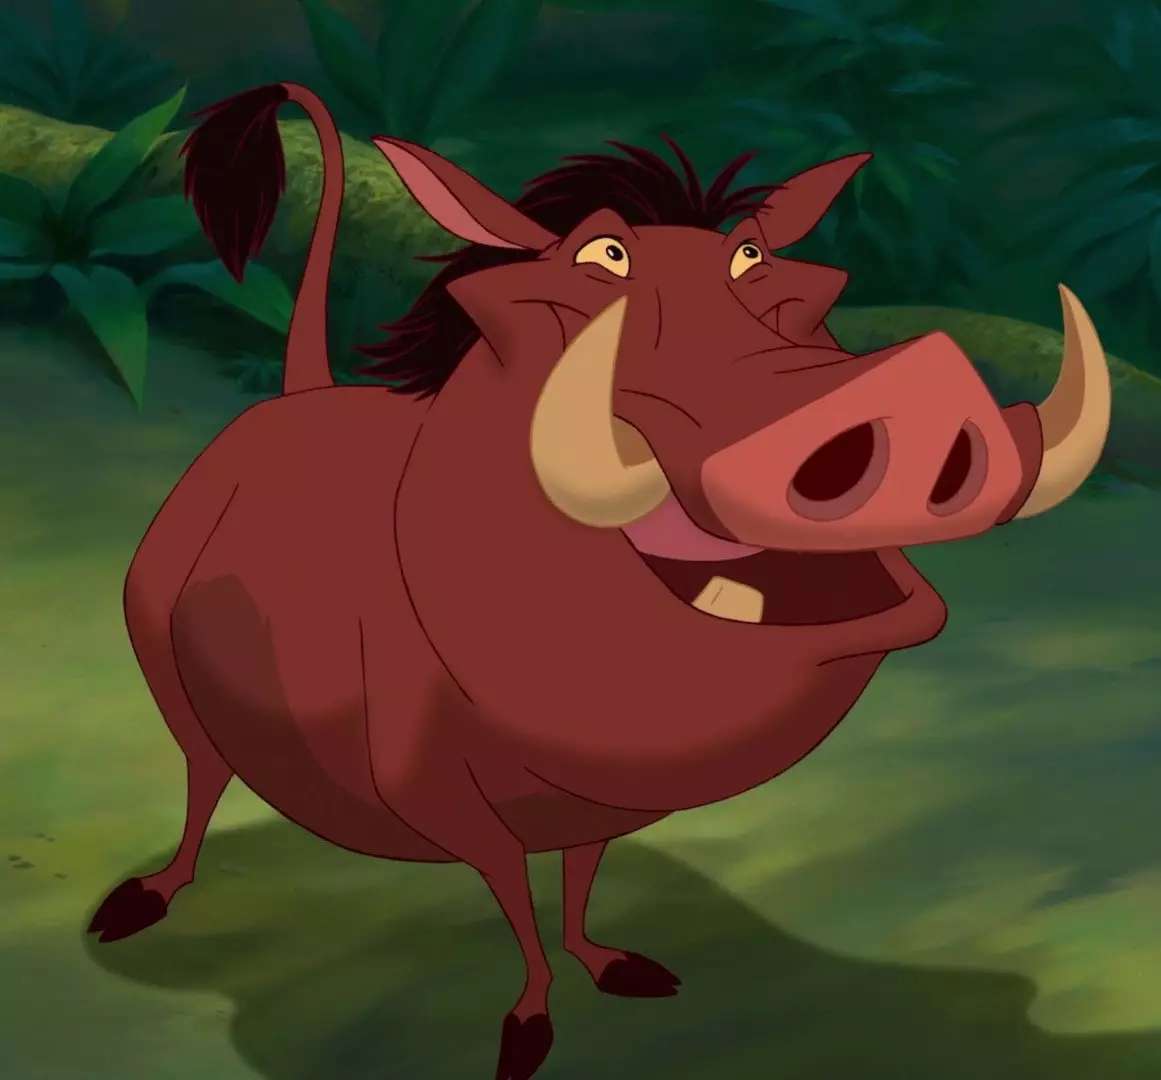 Pumbaa in the 1994 original.